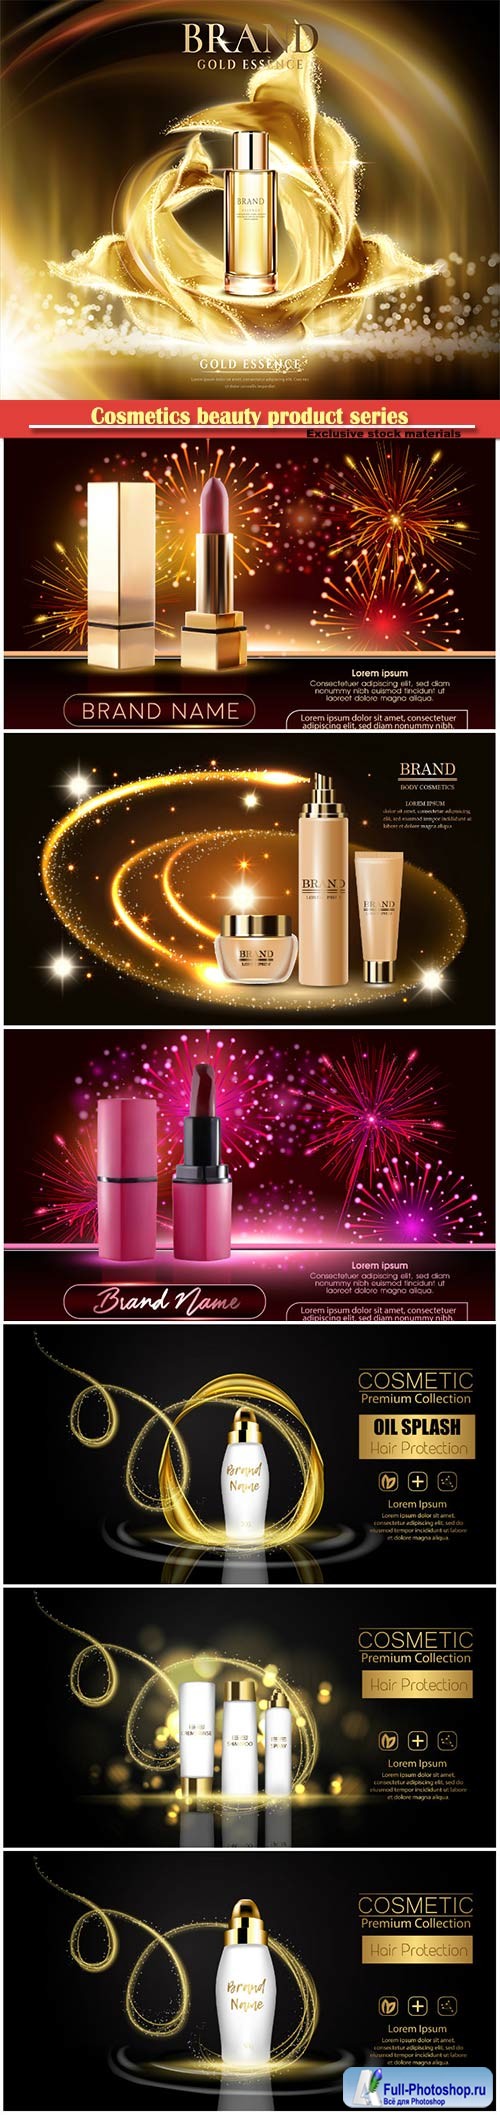 Cosmetics beauty product series, presentation banners mockup, vector illustration